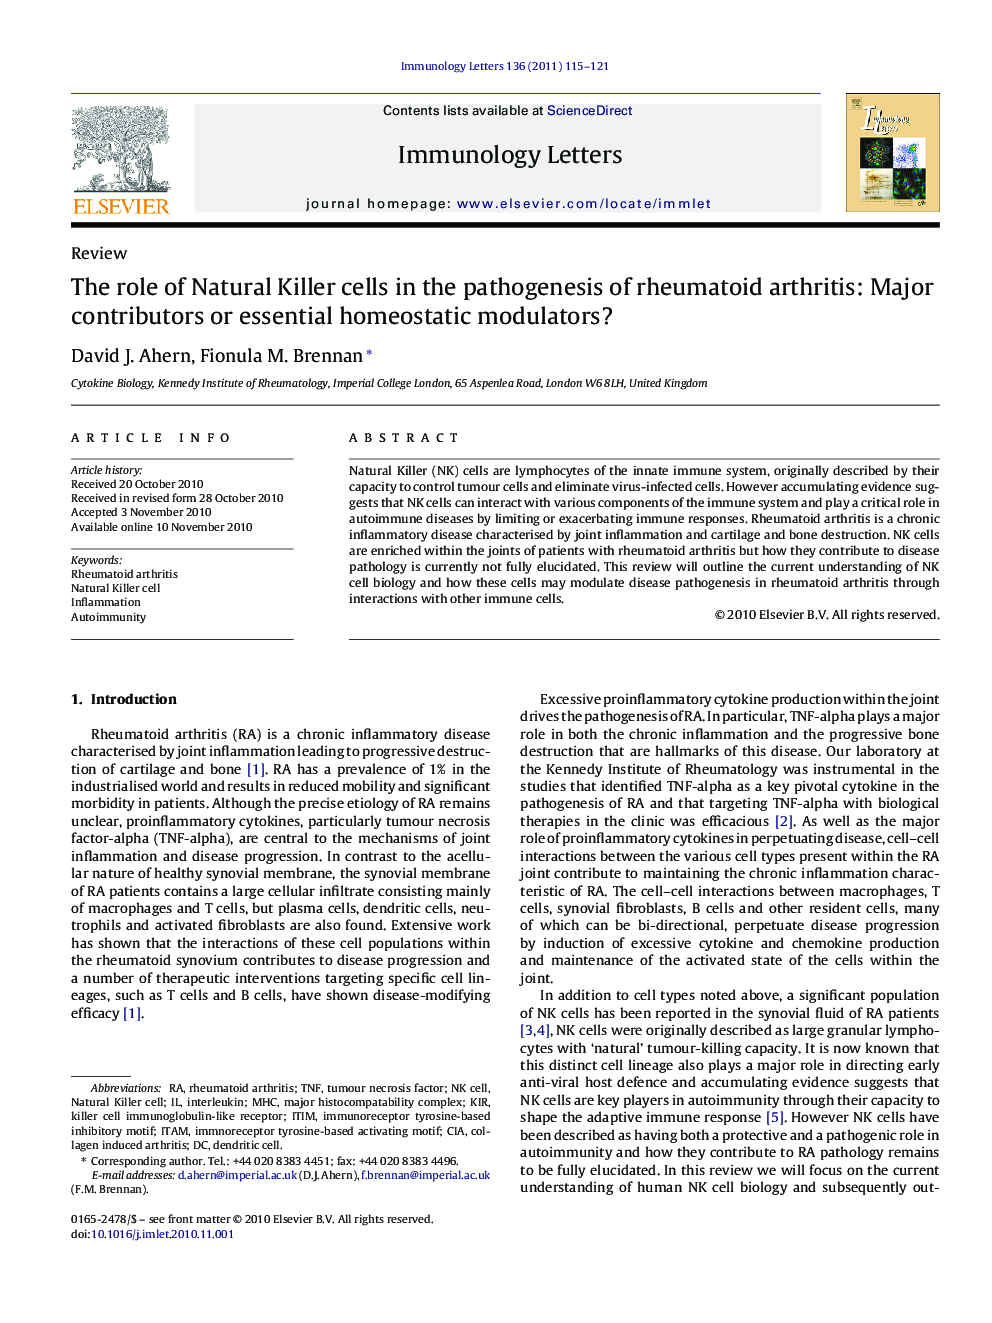 The role of Natural Killer cells in the pathogenesis of rheumatoid arthritis: Major contributors or essential homeostatic modulators?